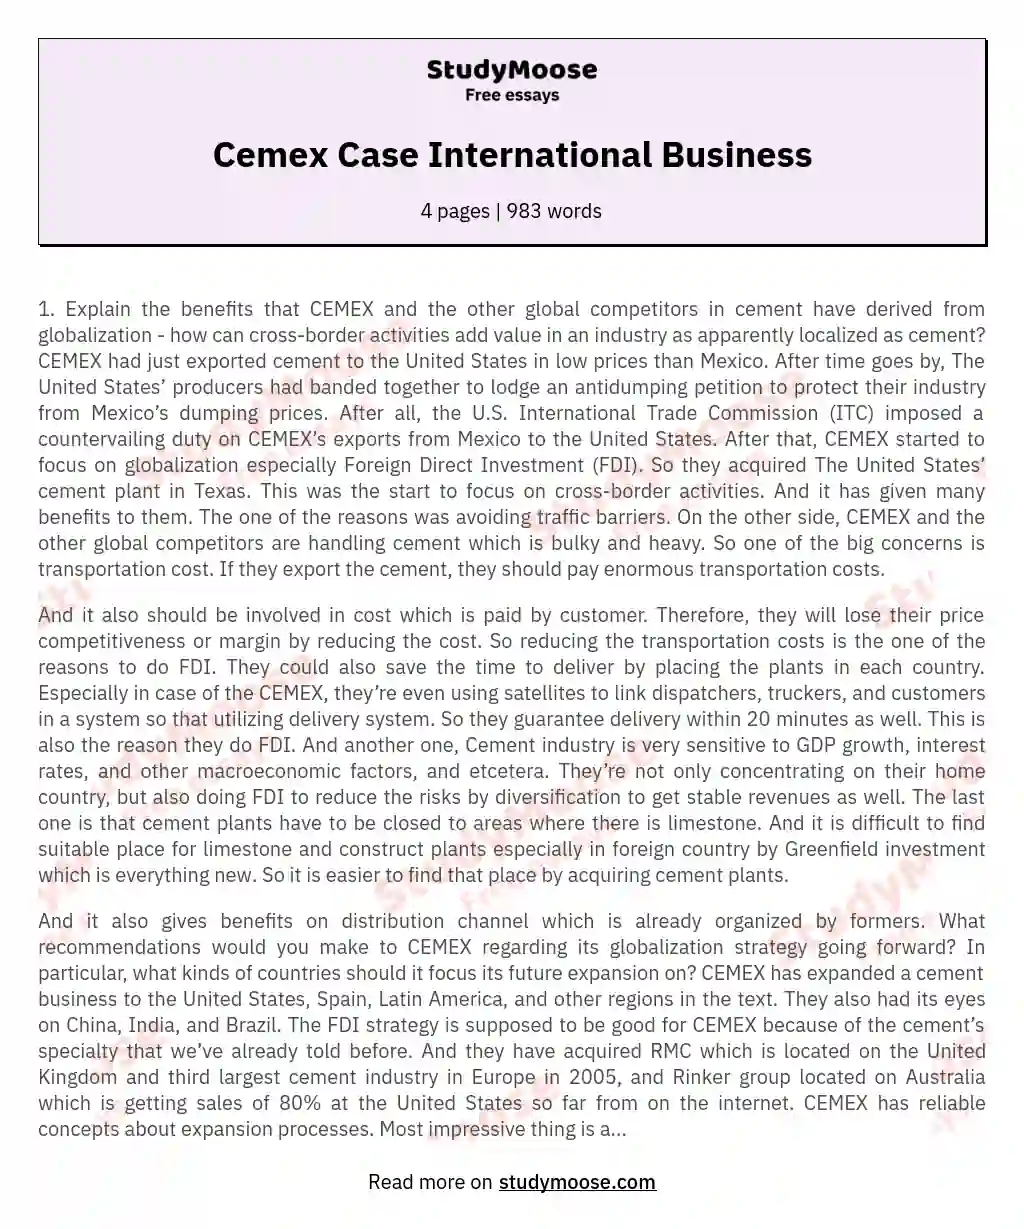 Cemex Case International Business essay